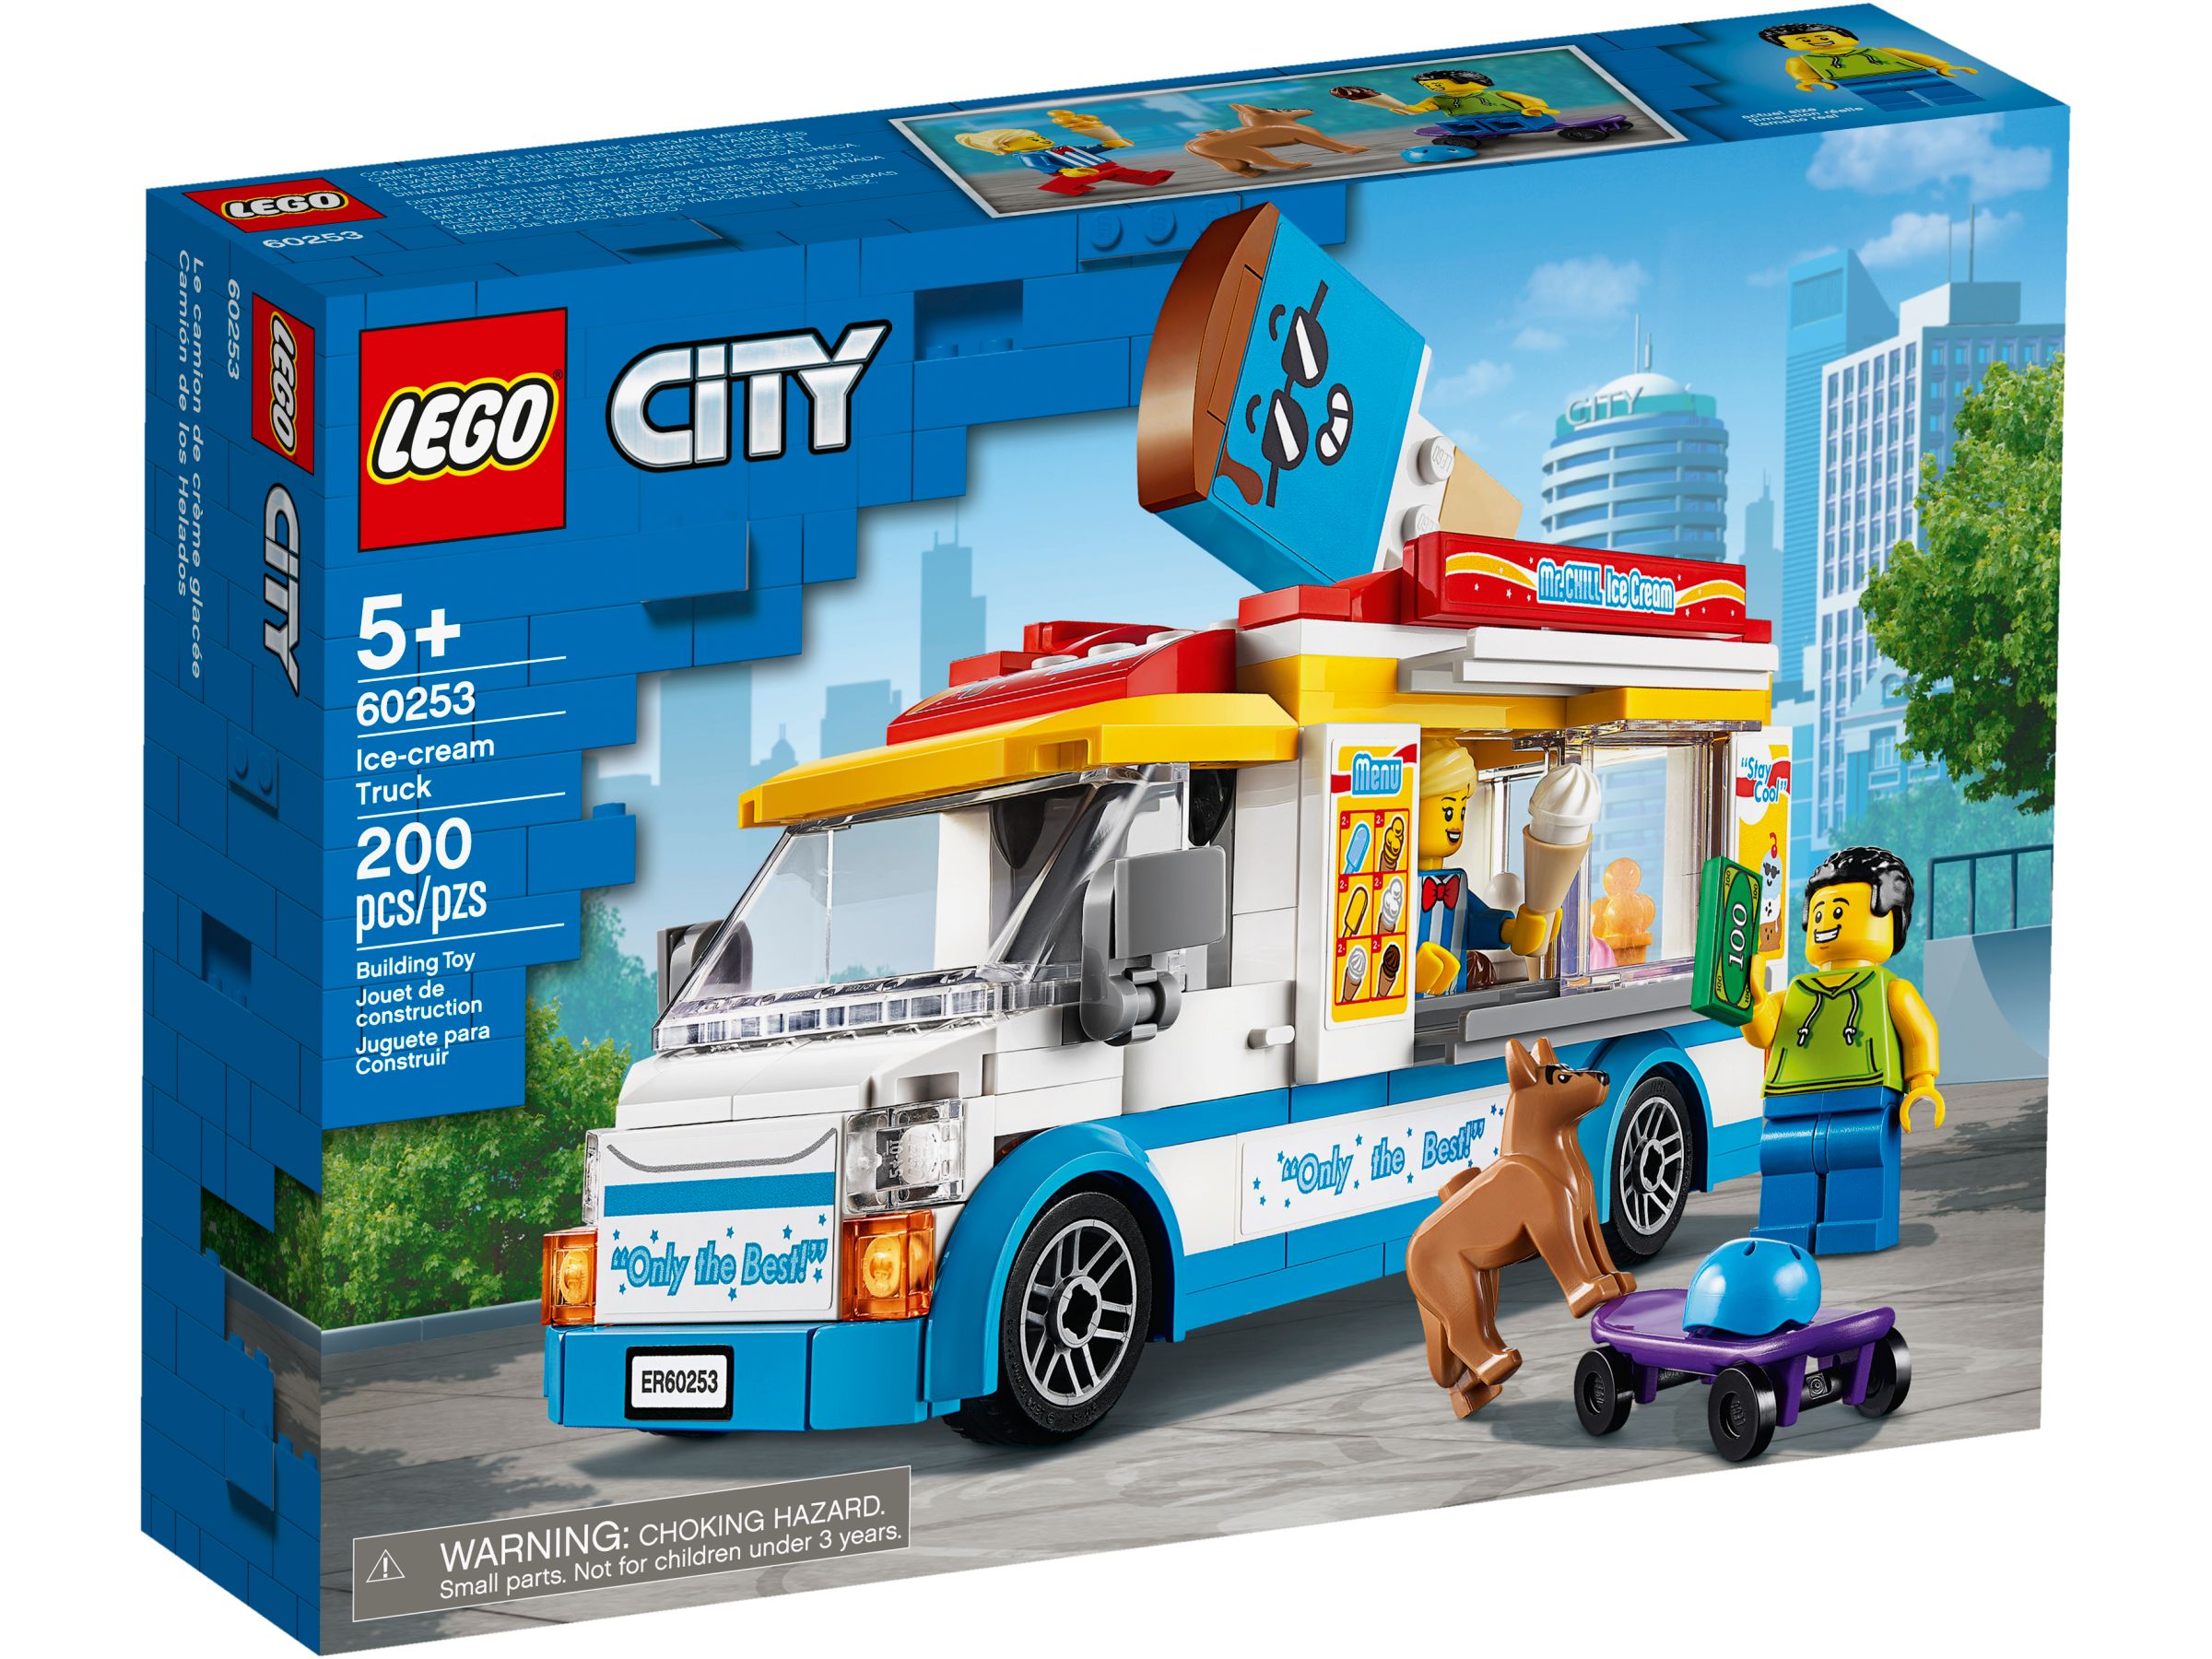 LEGO City 60253 Eiswagen LEGO_60253_alt1.jpg